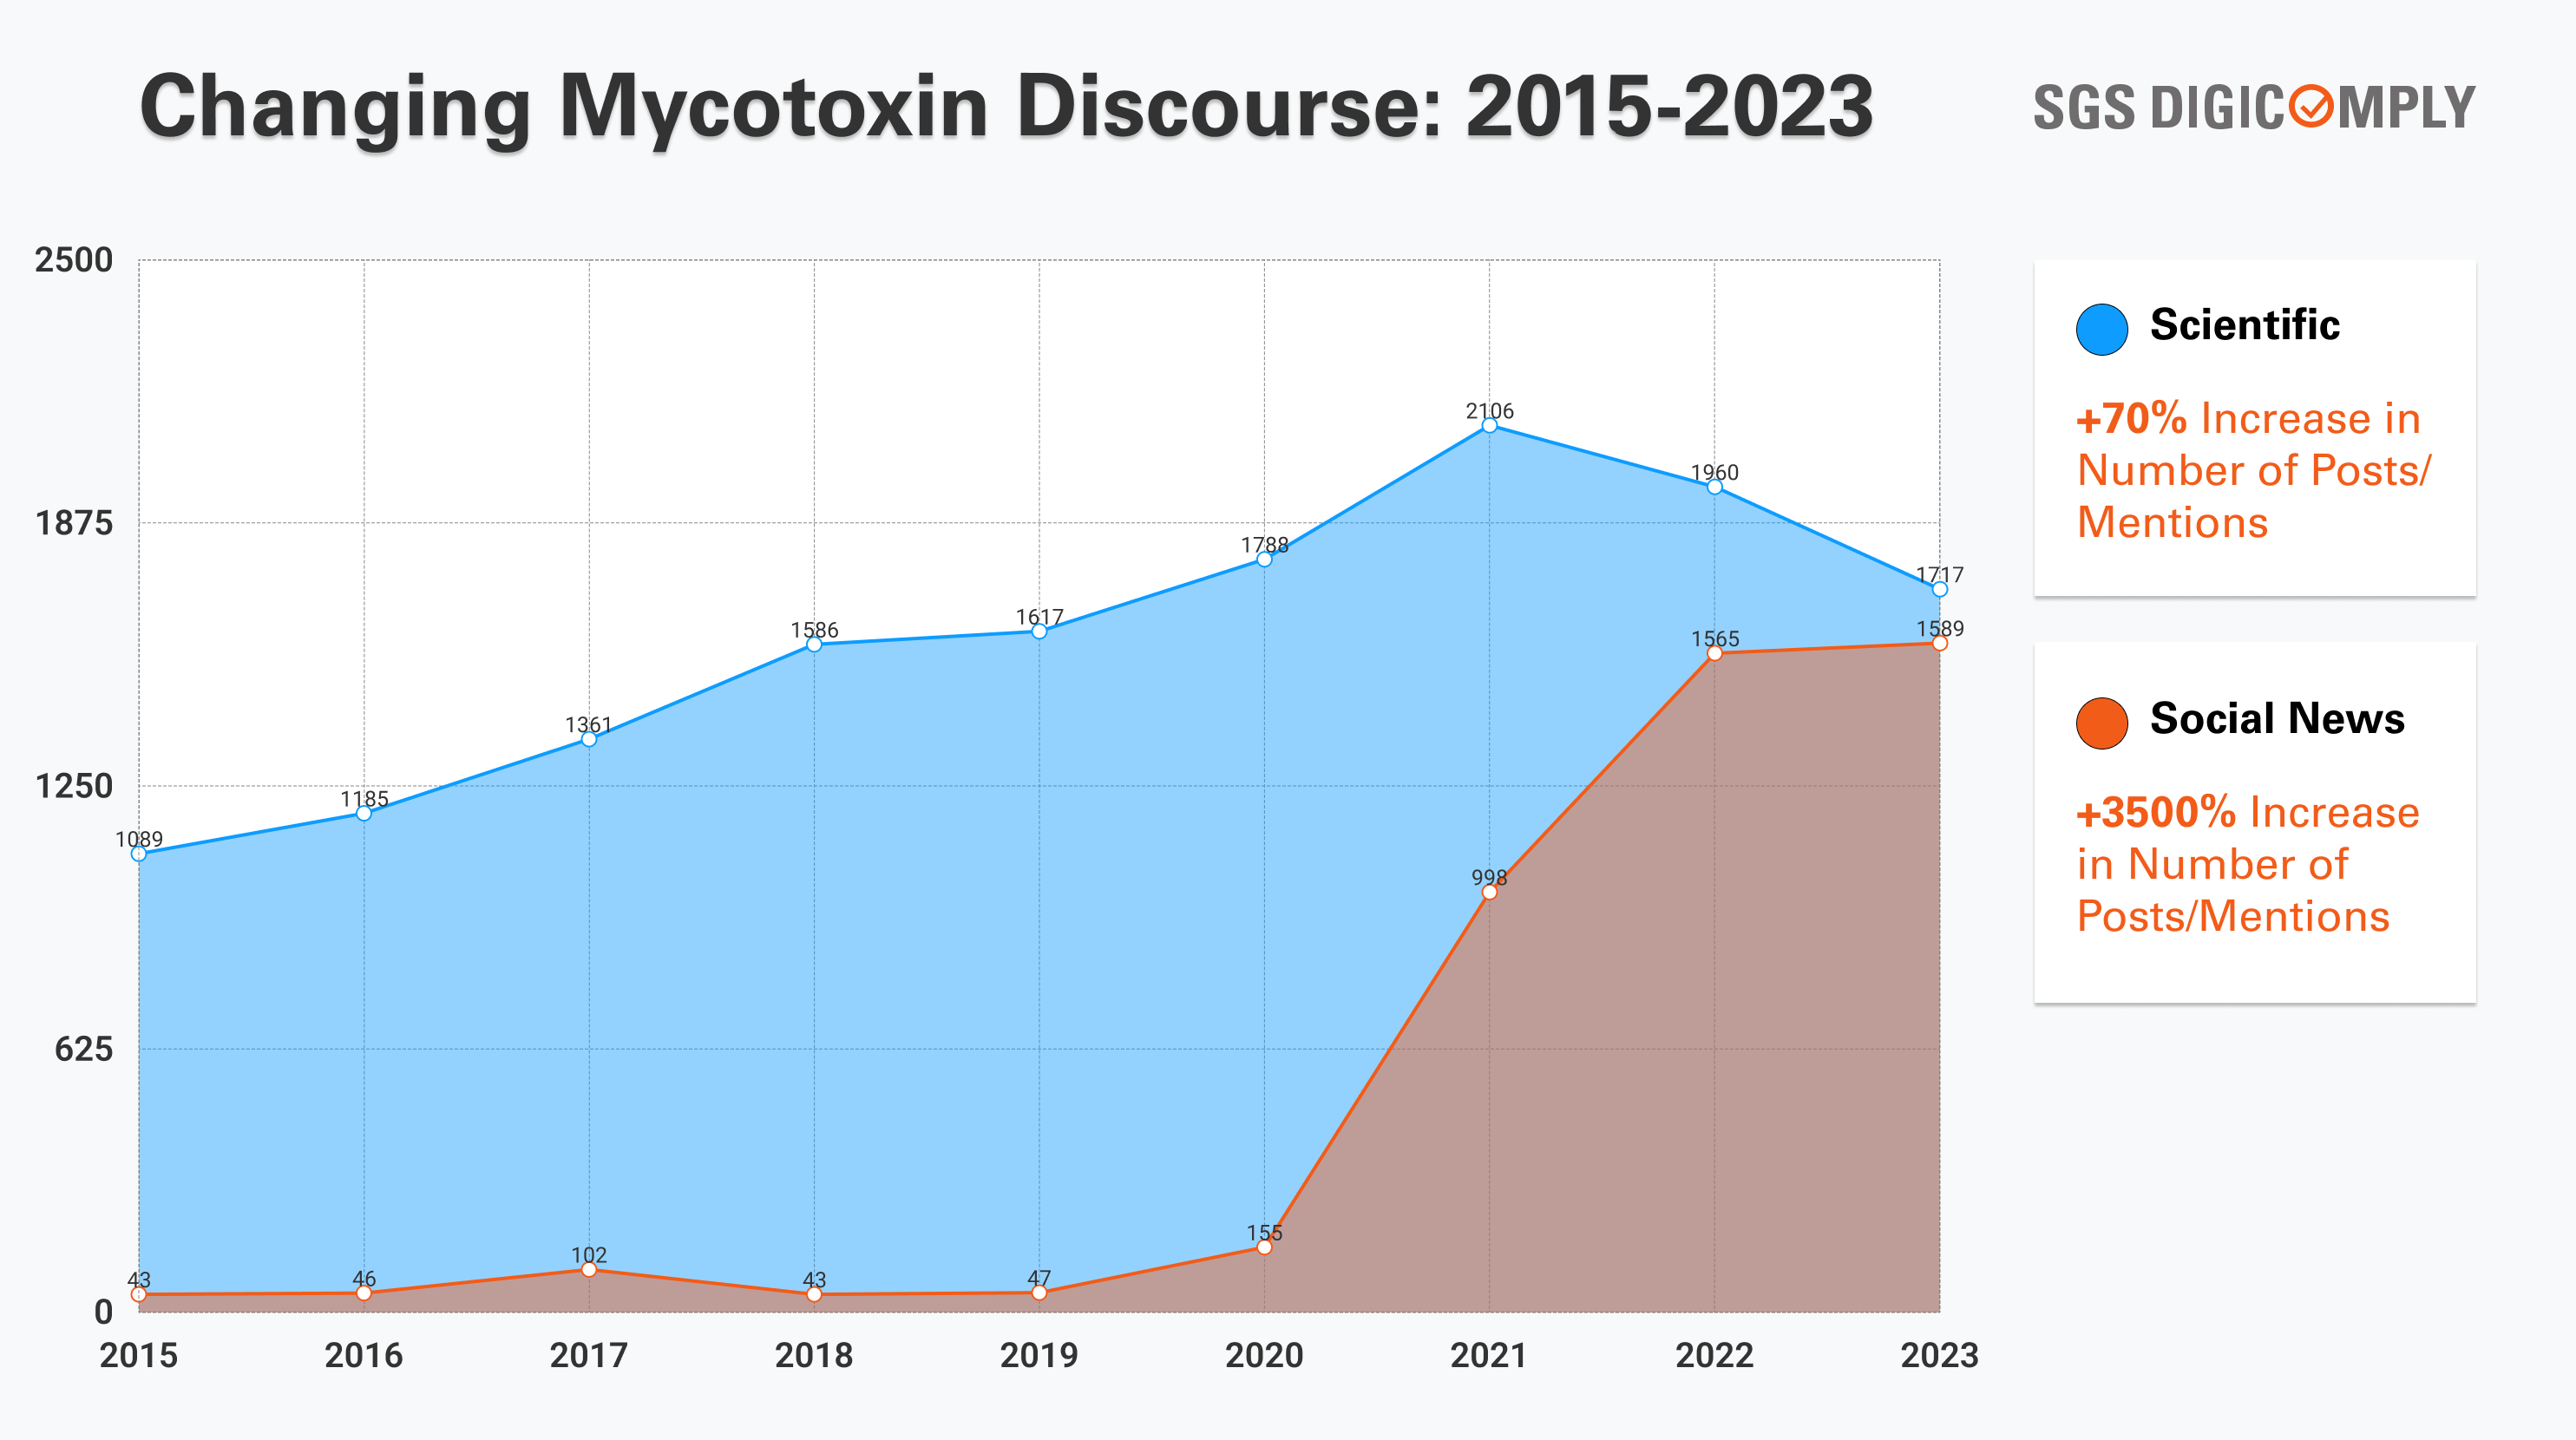 Mycotoxin Related Scientific Publications vs Social Media Mentions